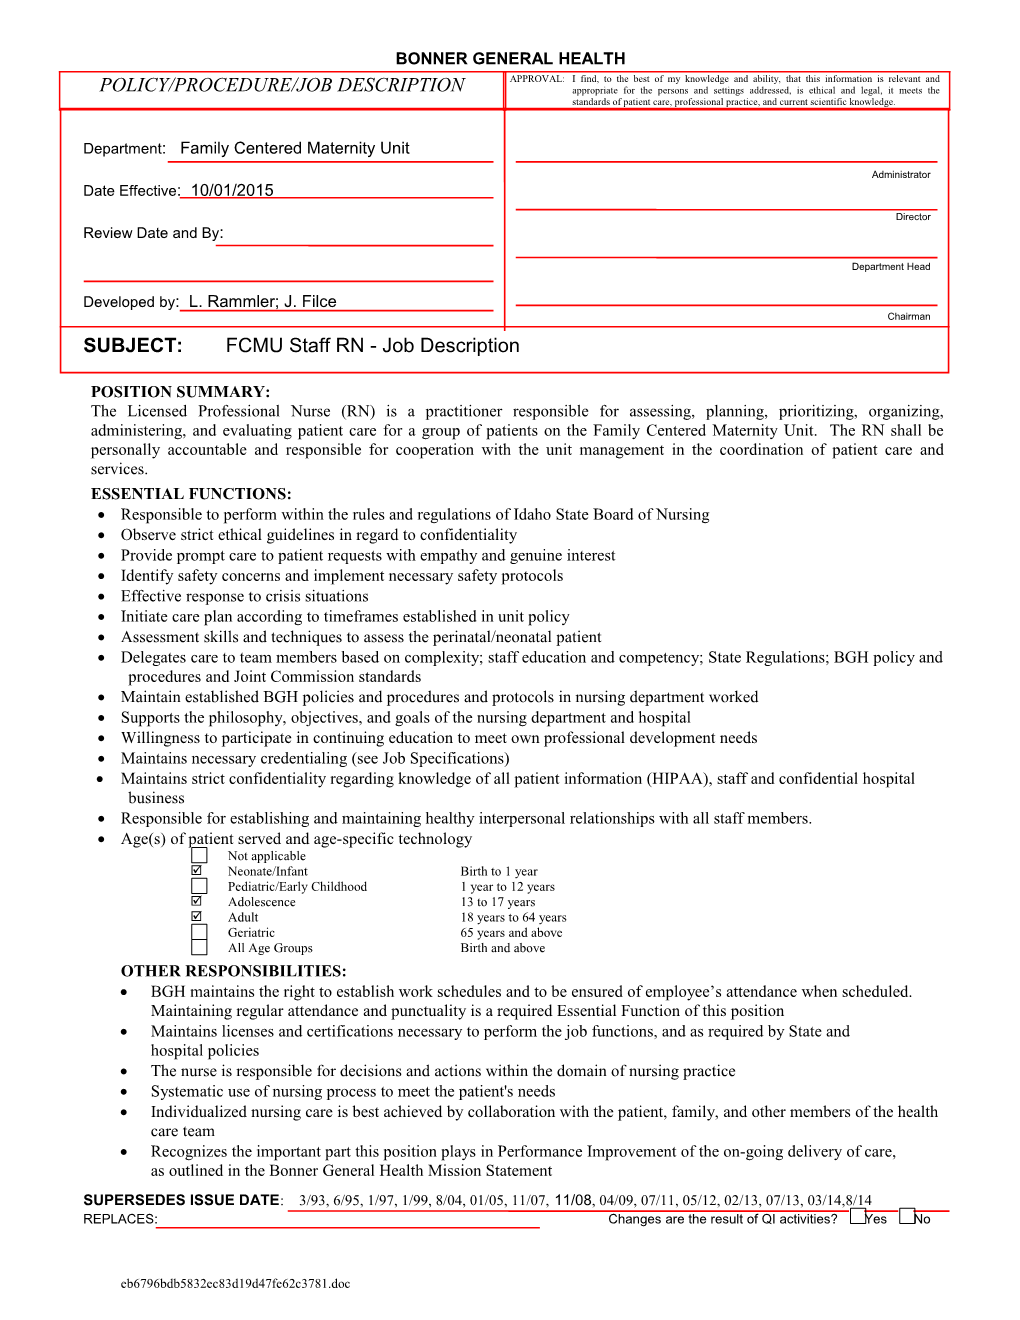 Subject:FCMU Staff RN - Job Description